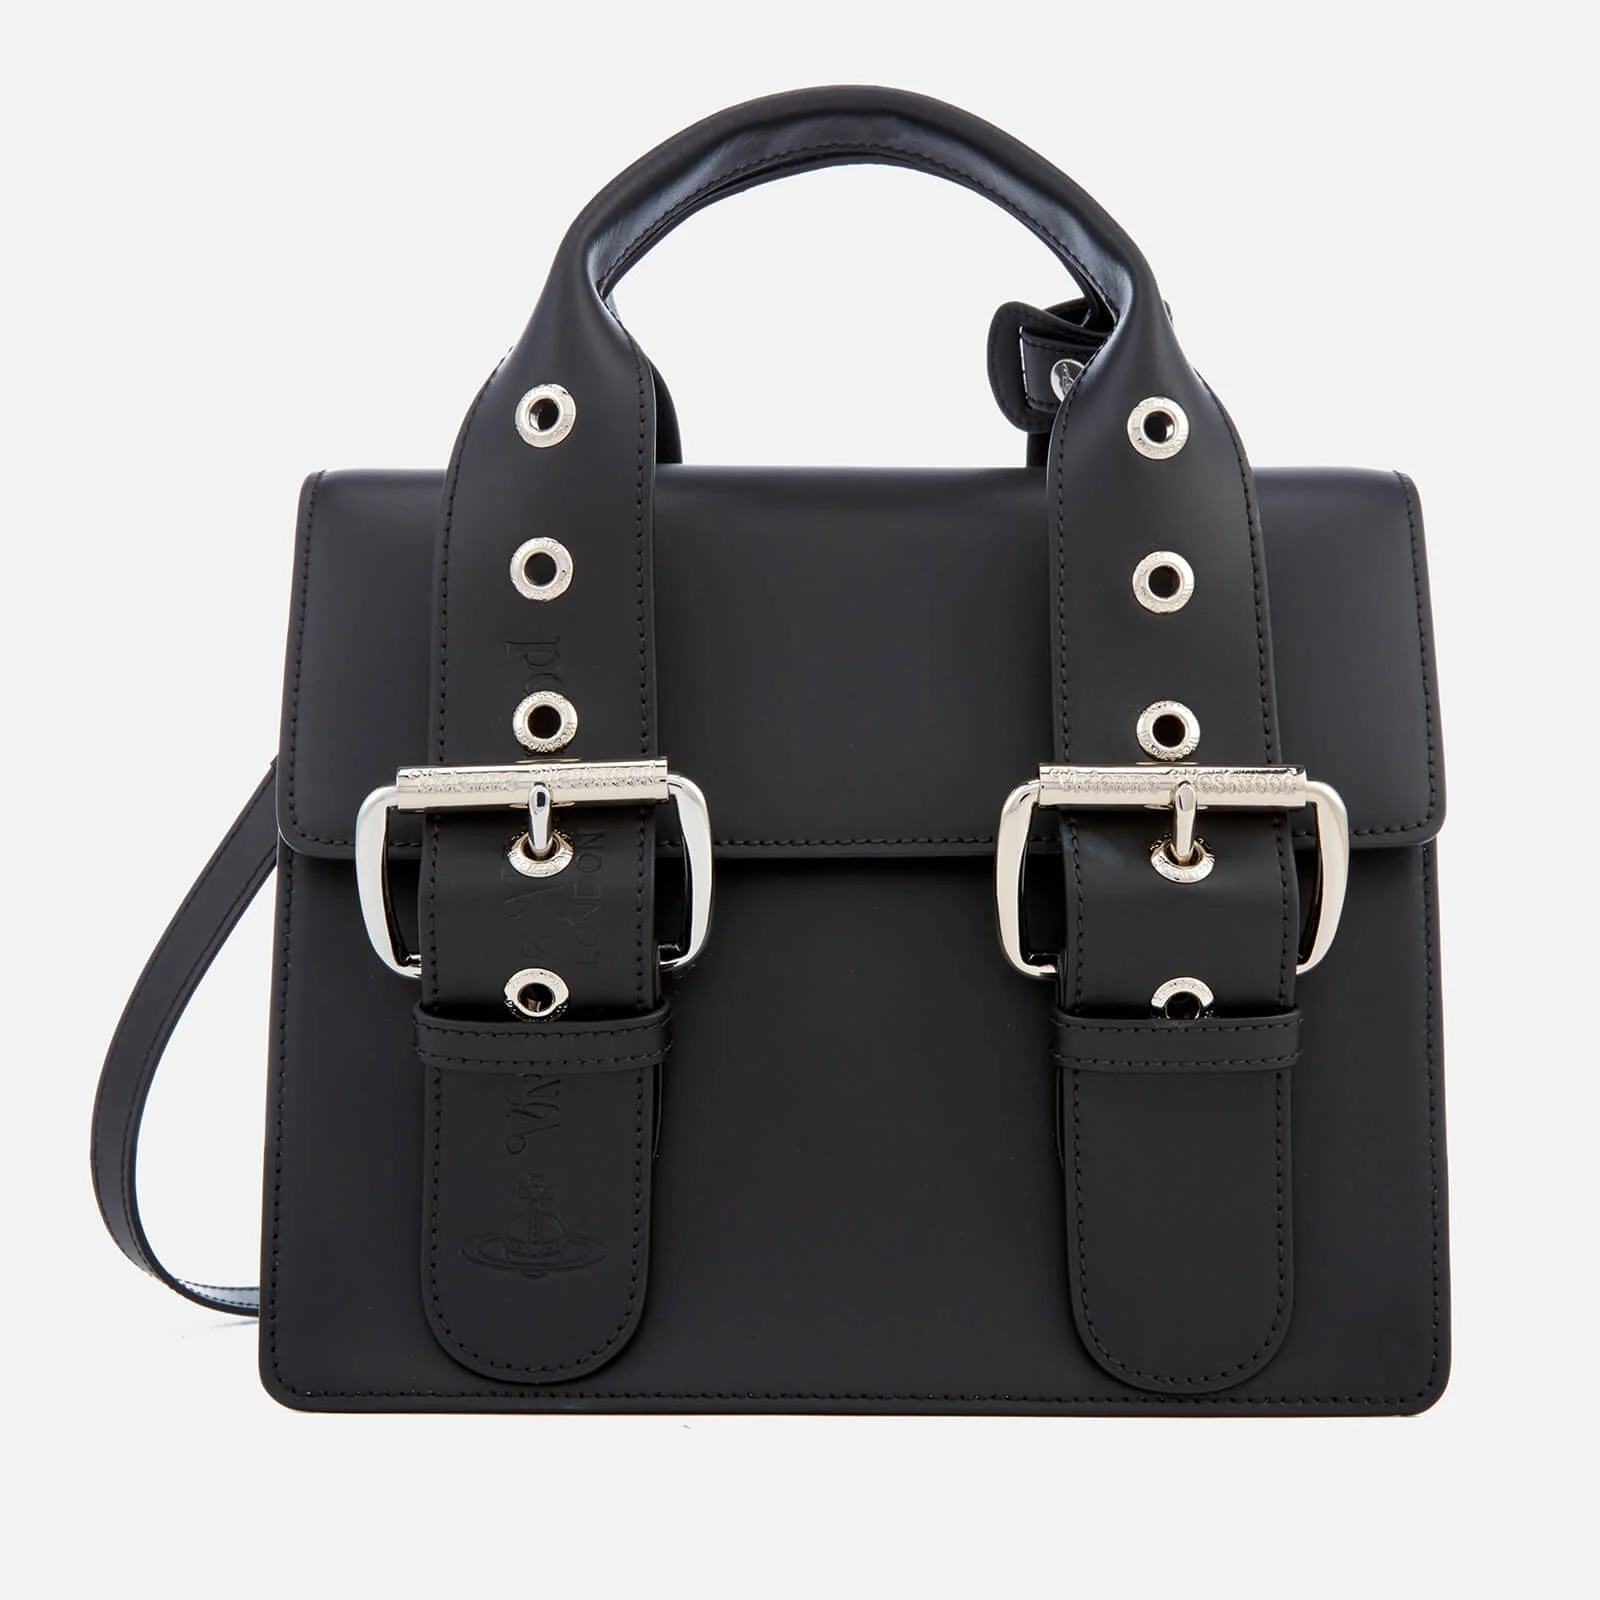 Vivienne Westwood Women's Alex Medium Handbag - Black Image 1